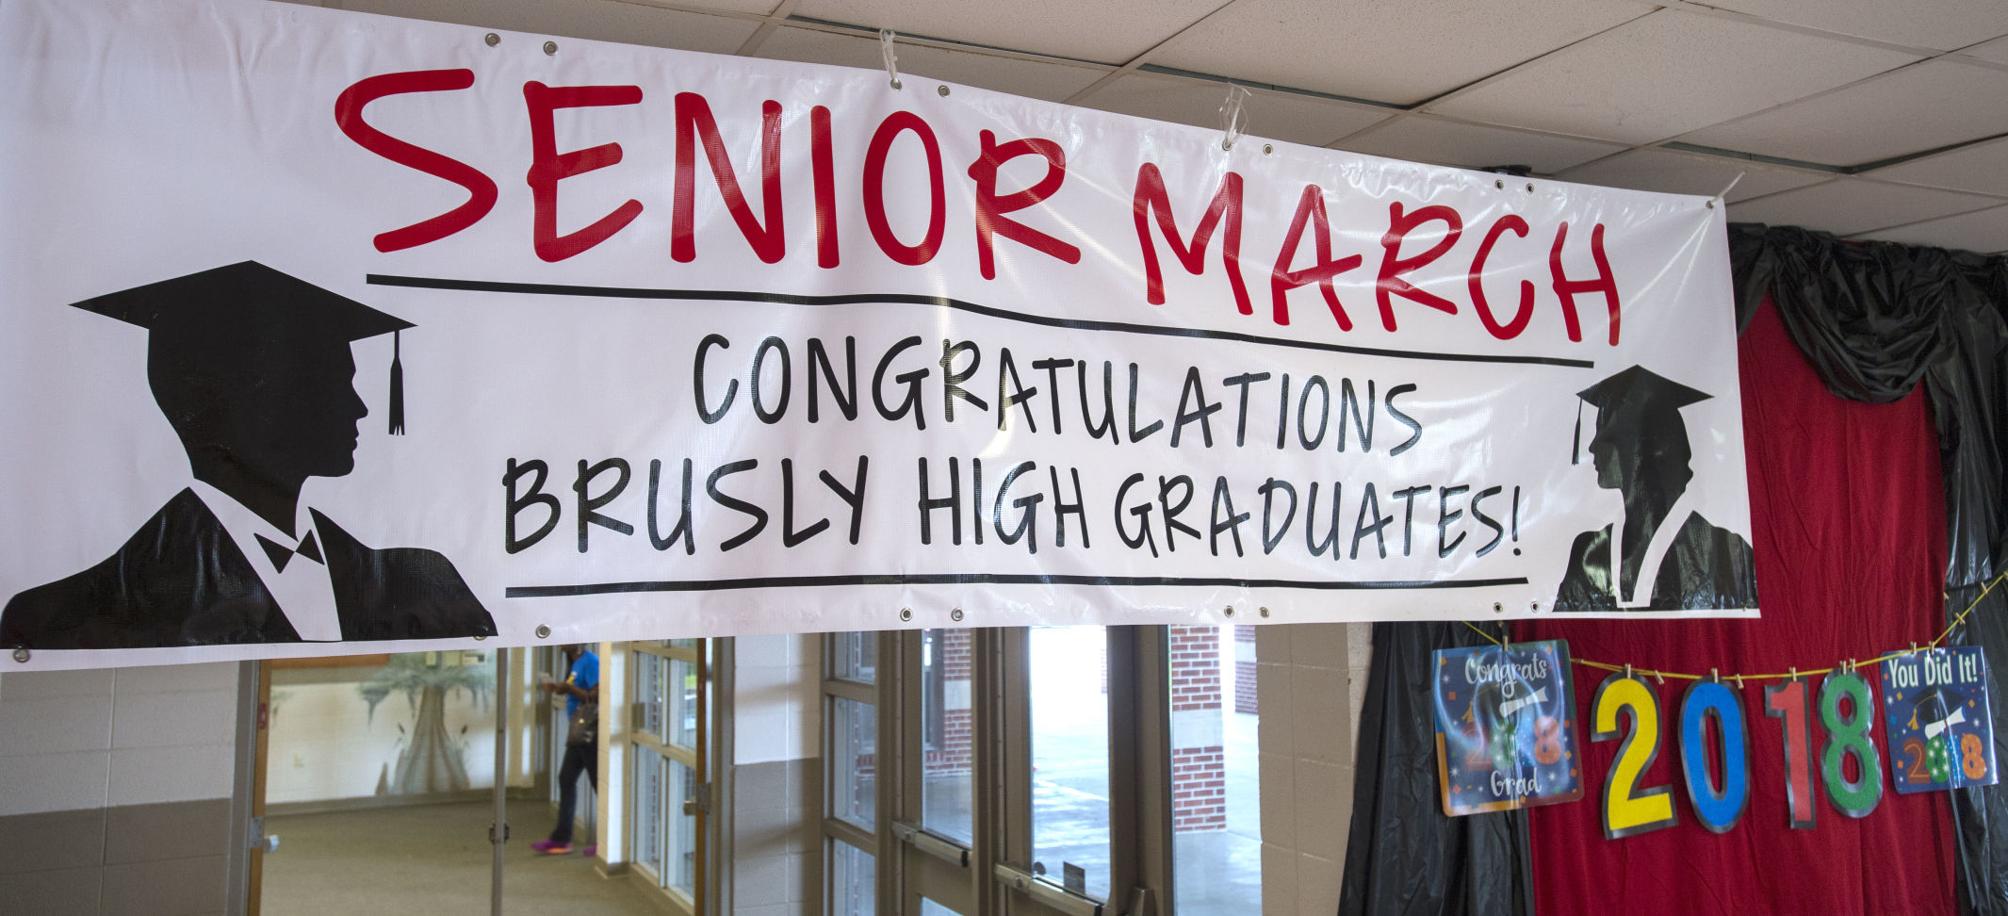 Photos, video Brusly High graduates take 'Senior March' through Brusly